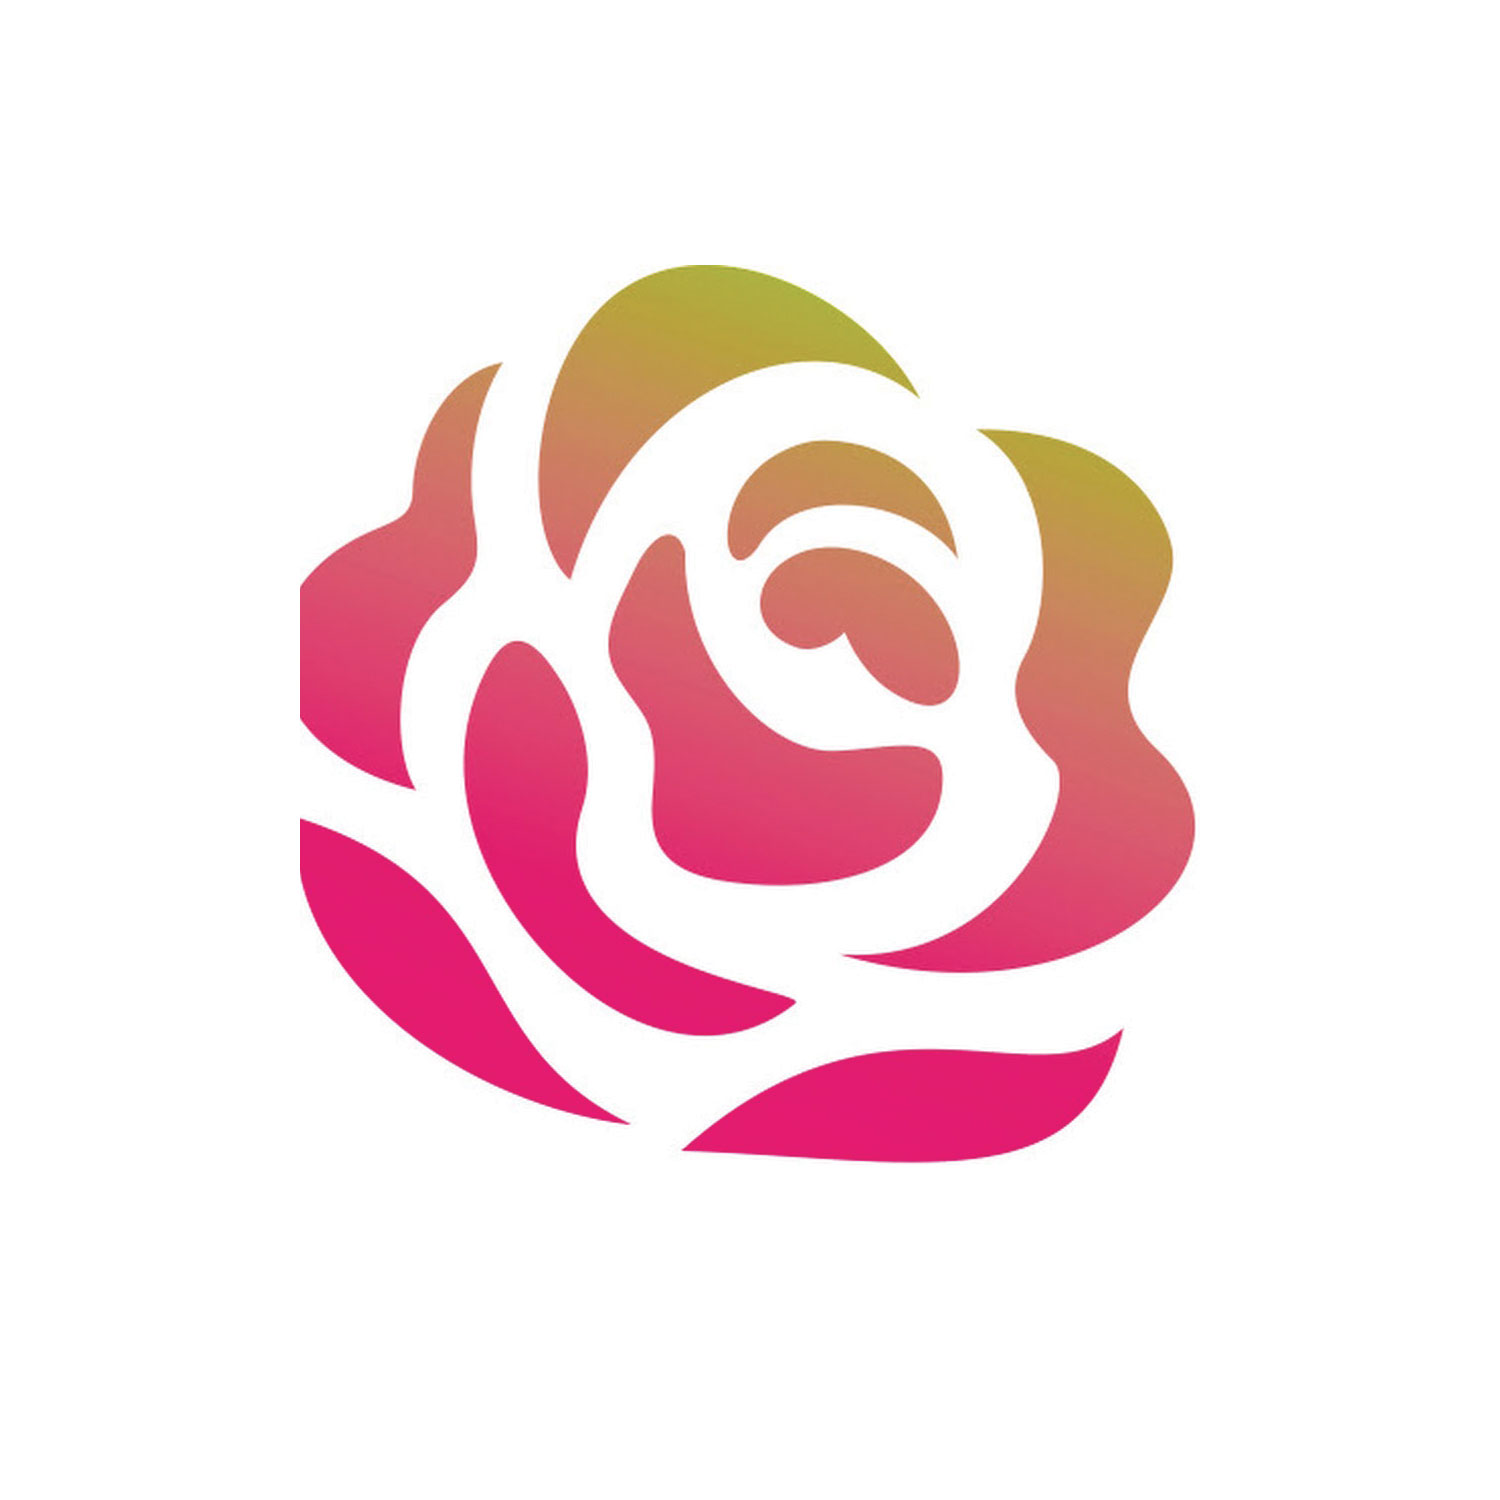 Logo association - Les roses du Gard